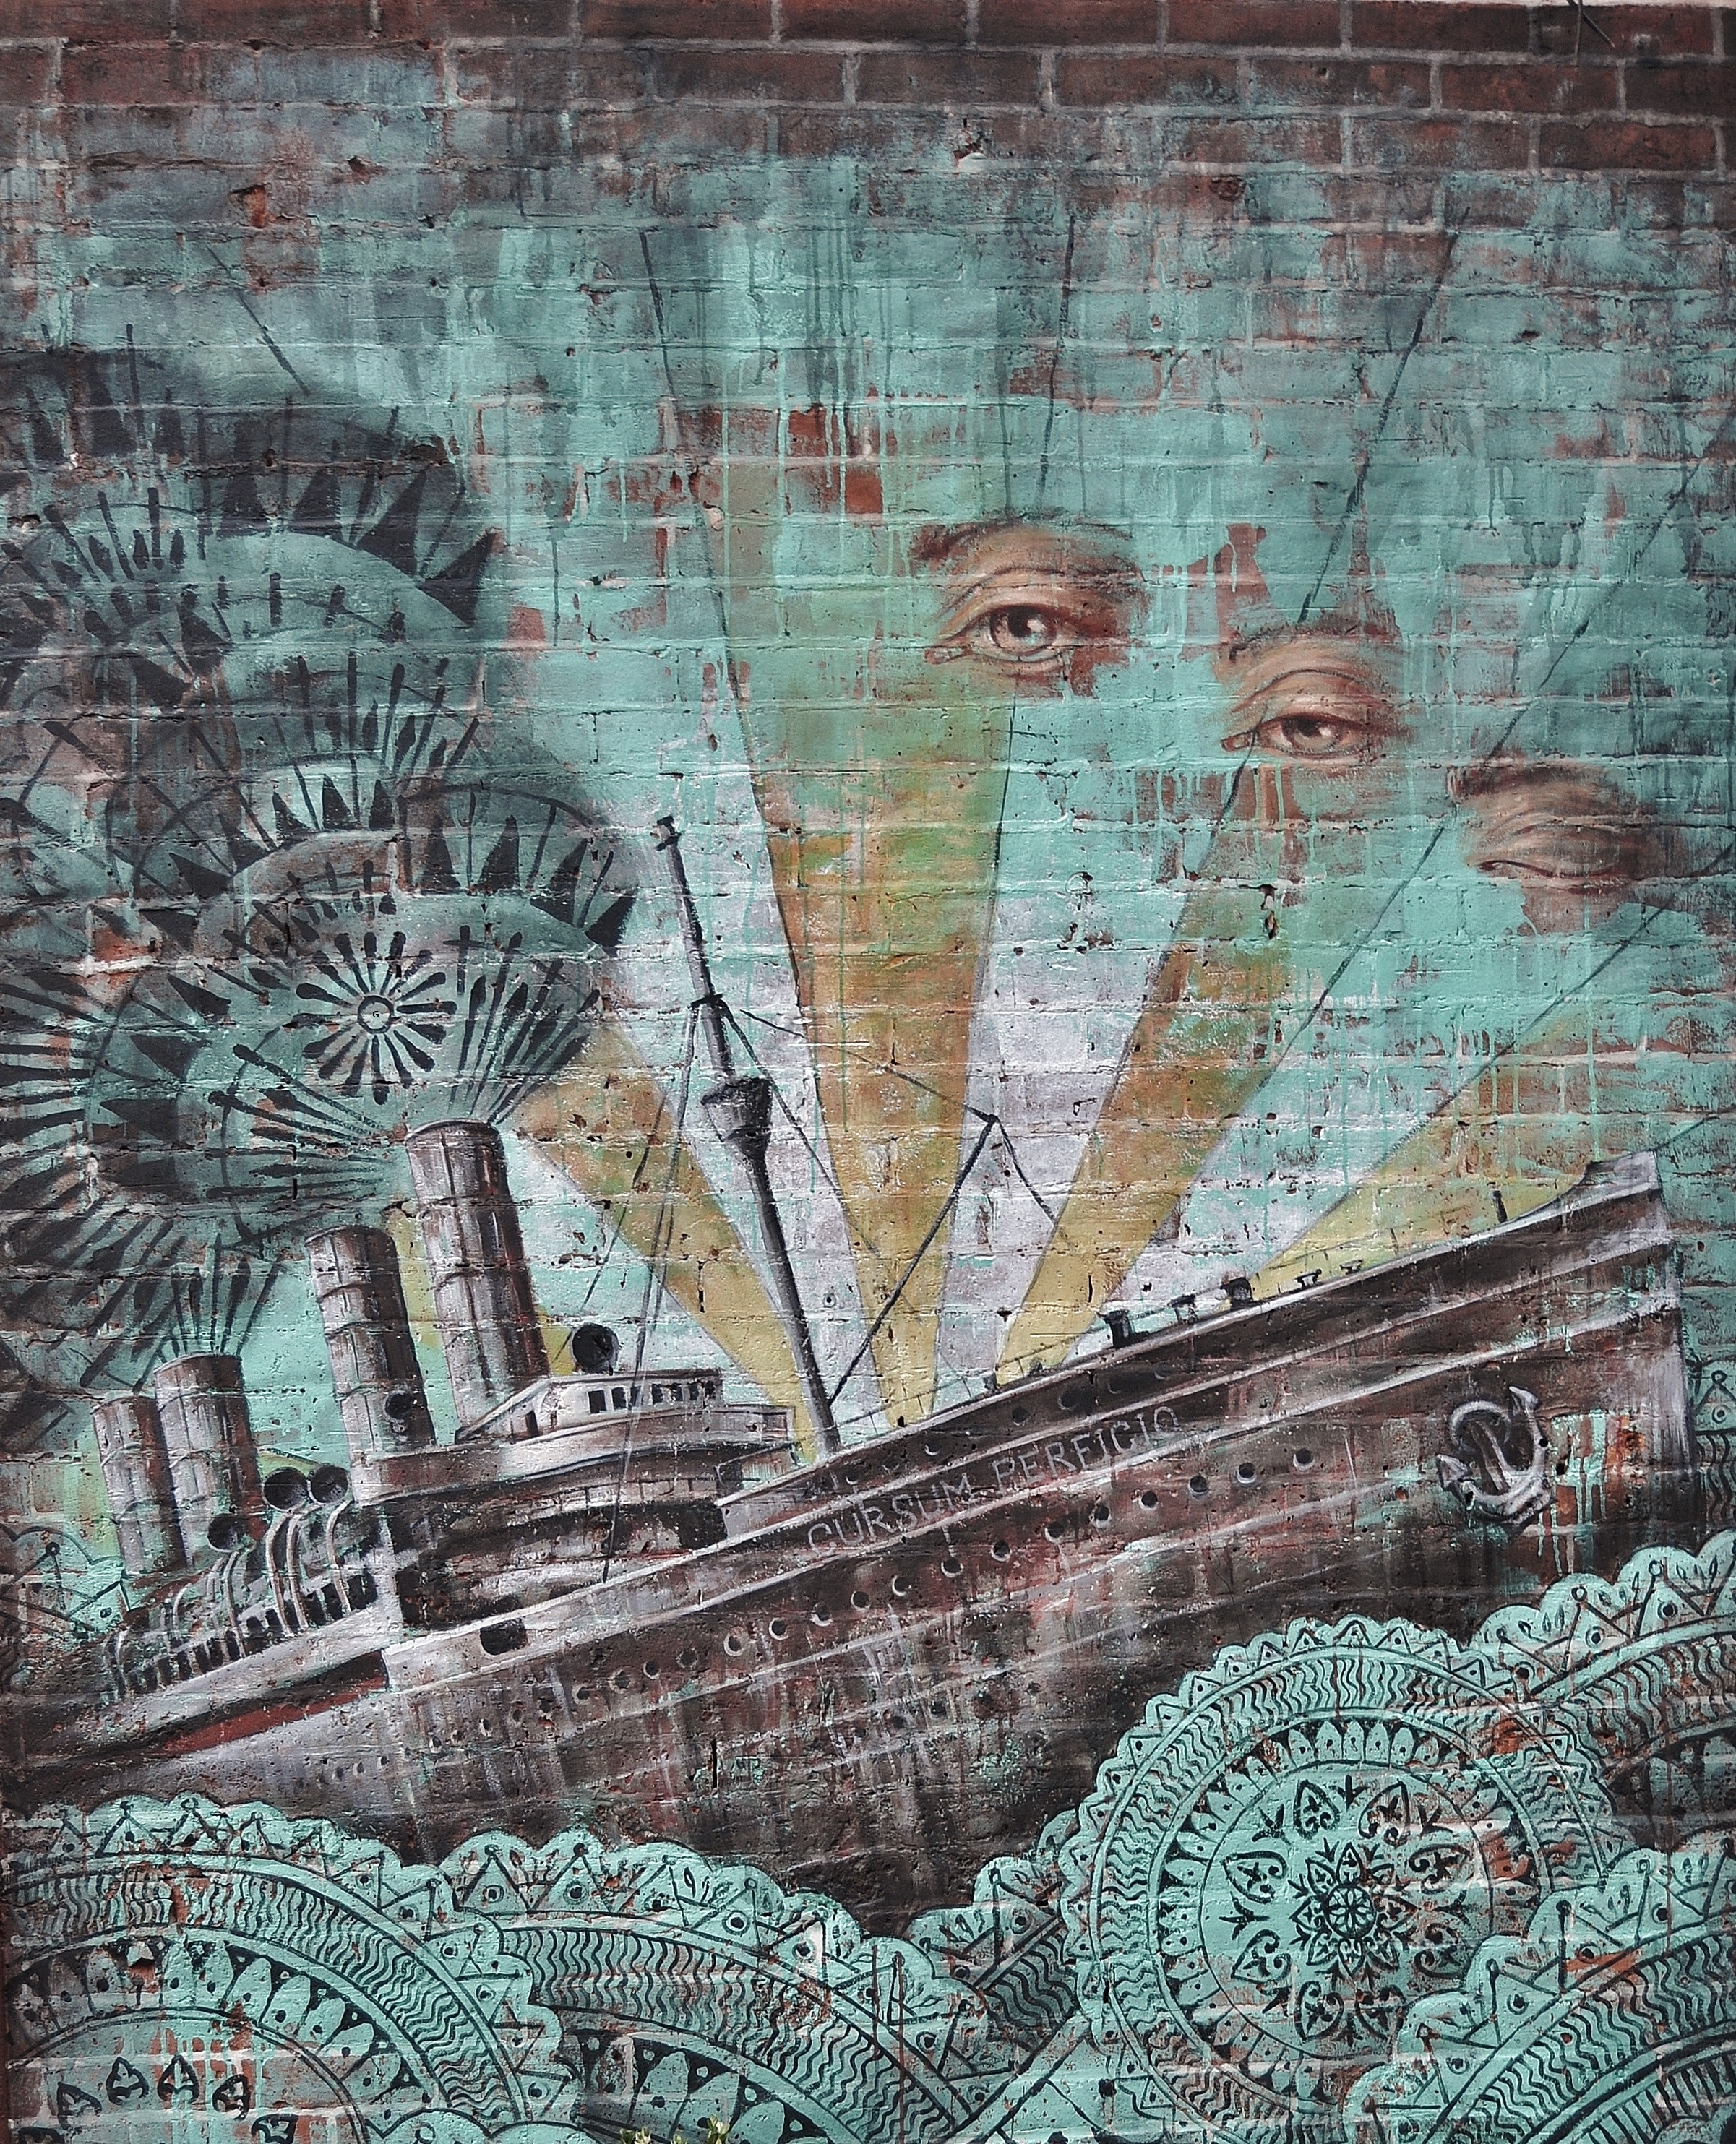 Ship and human eye painted on wall photo